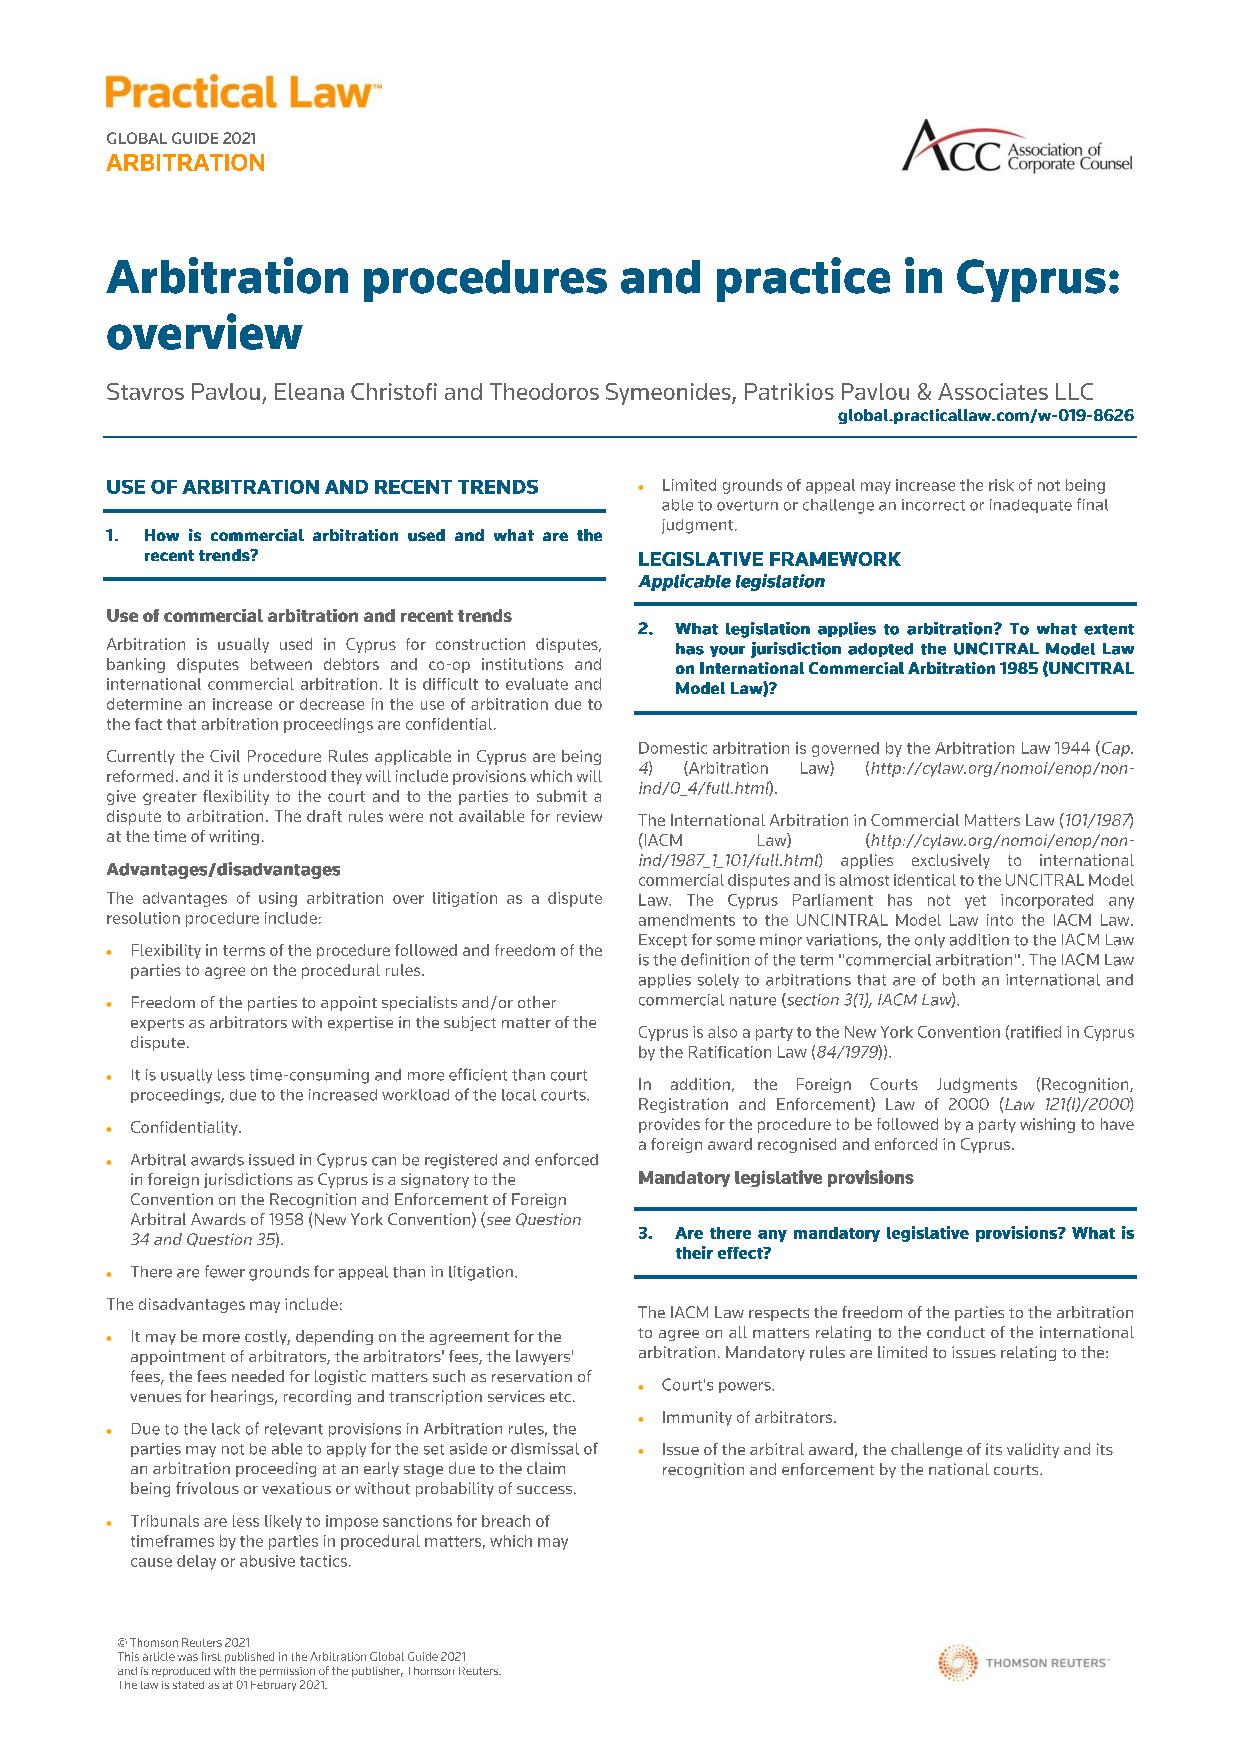 Patrikios Pavlou & Associates LLC: Arbitration procedures and practice in Cyprus: overview